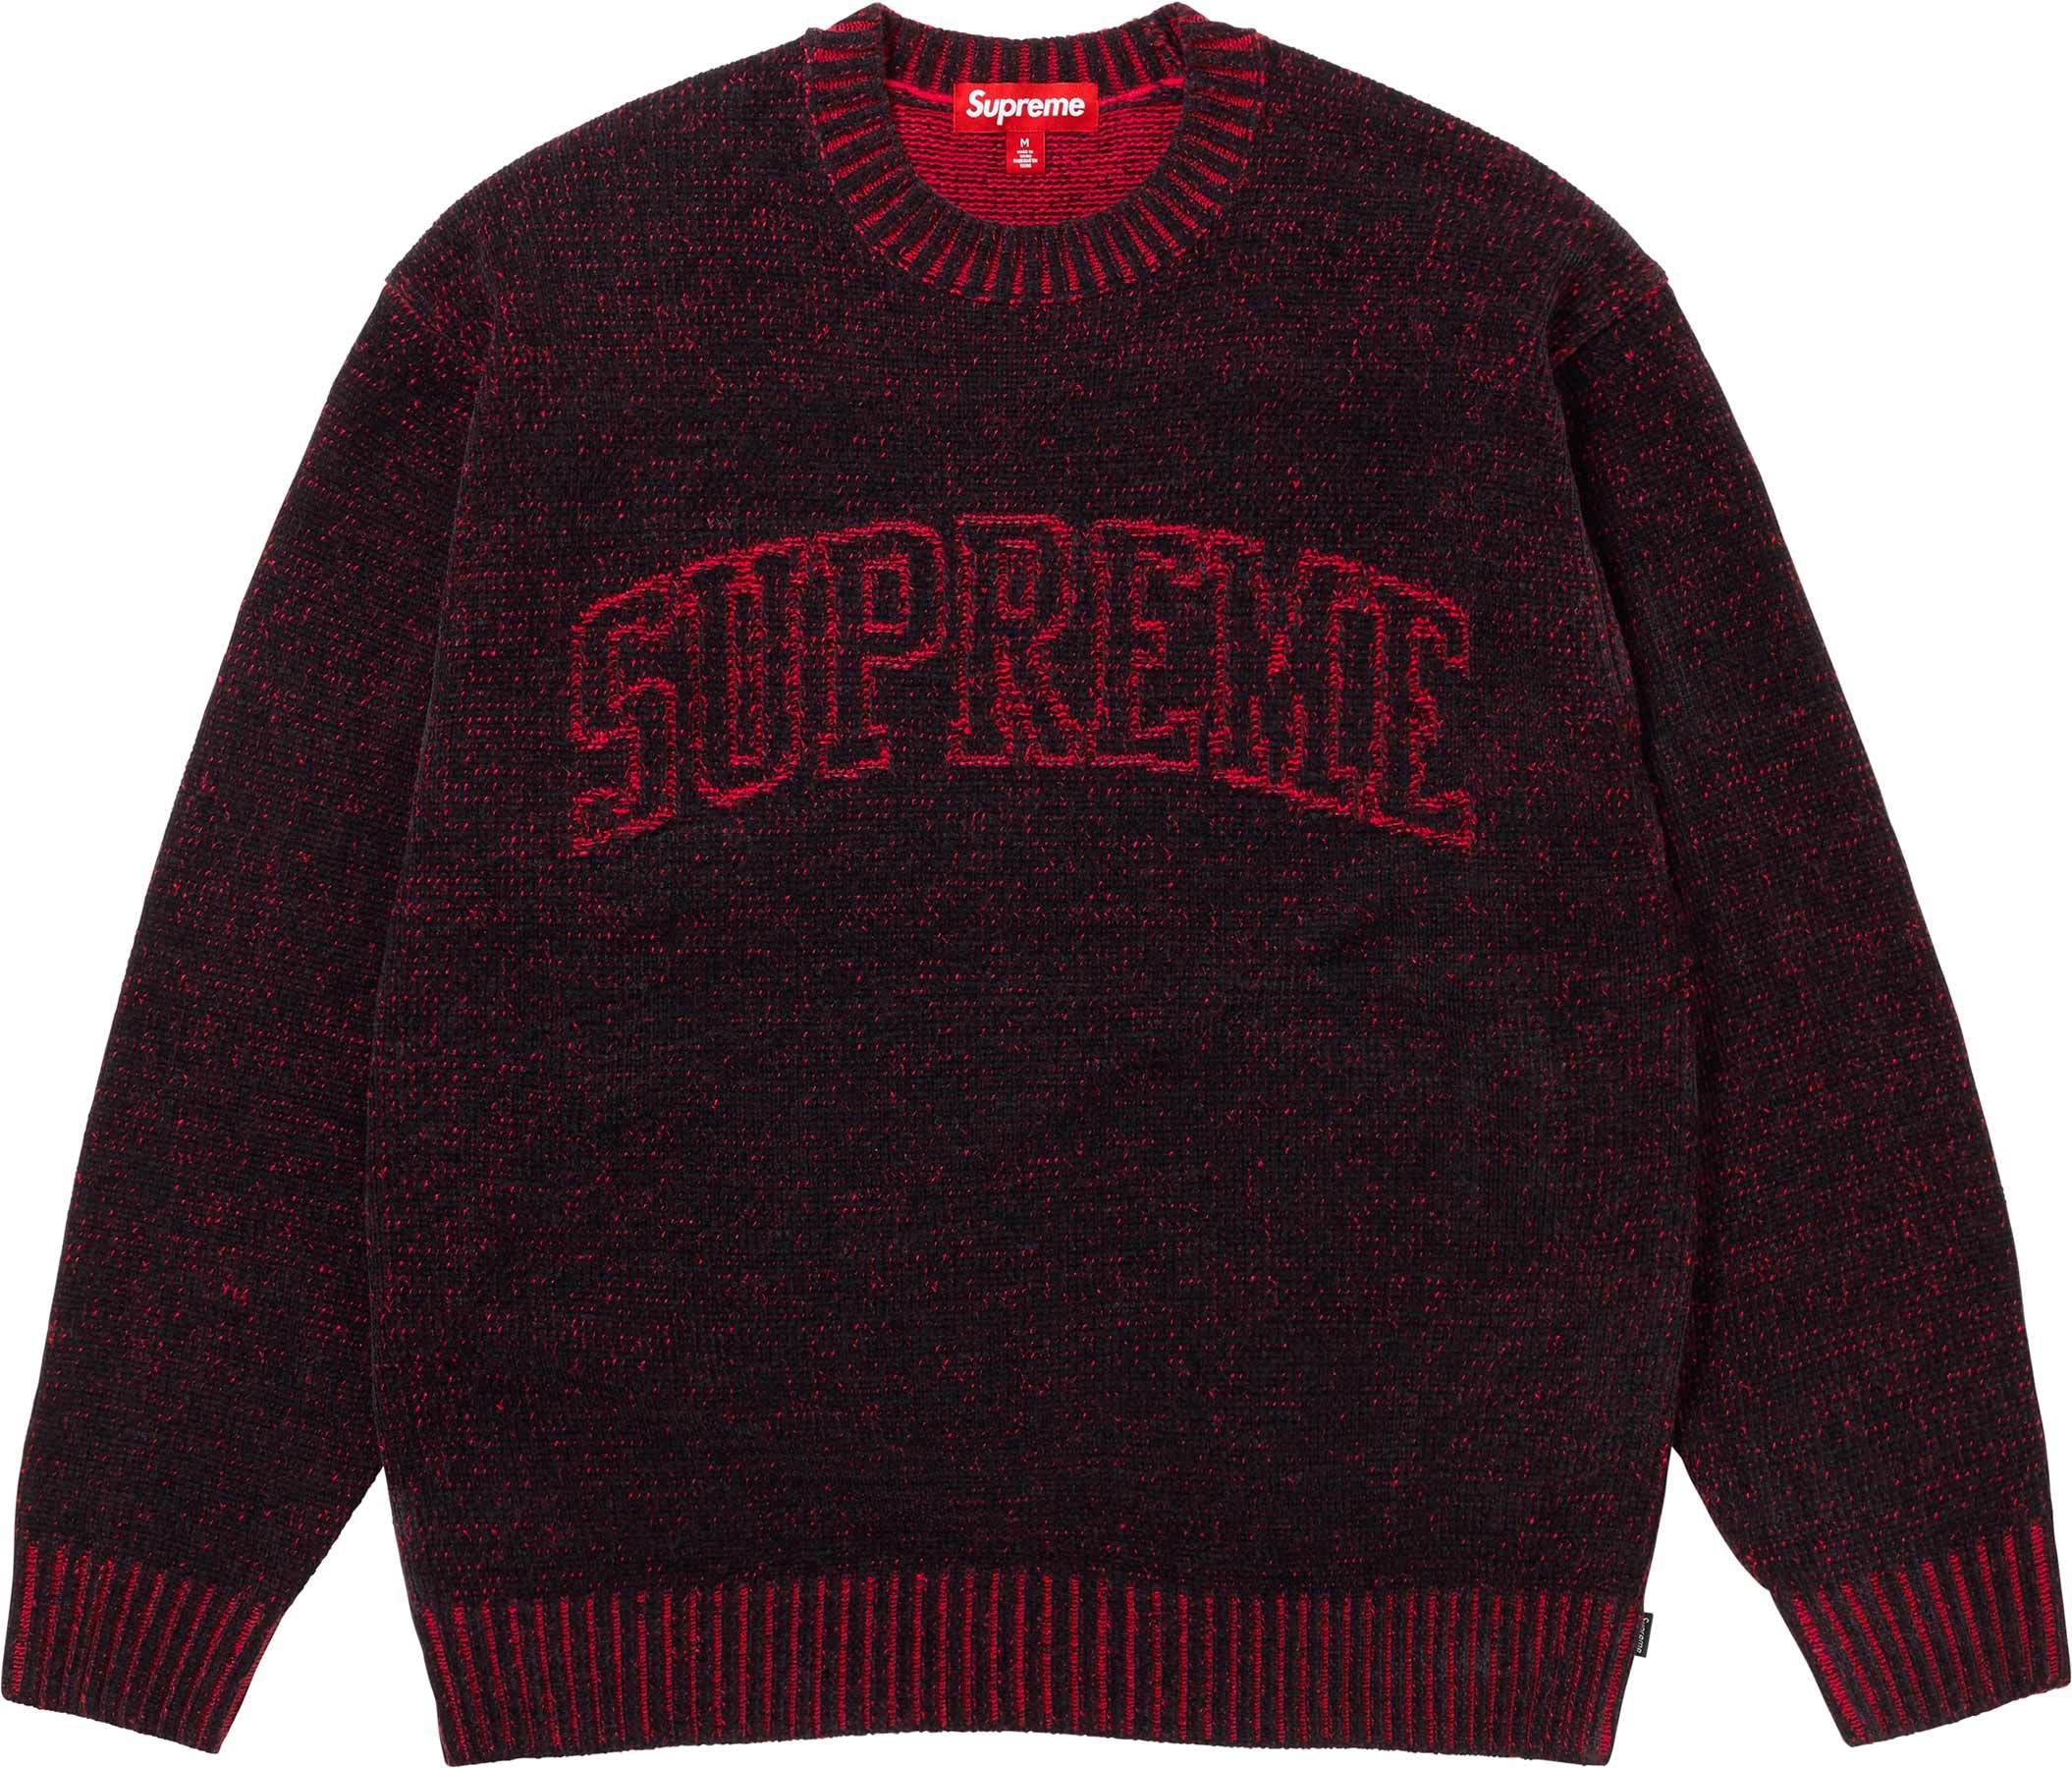 supreme Contrast Arc Sweater友達が着てた着丈で言うと